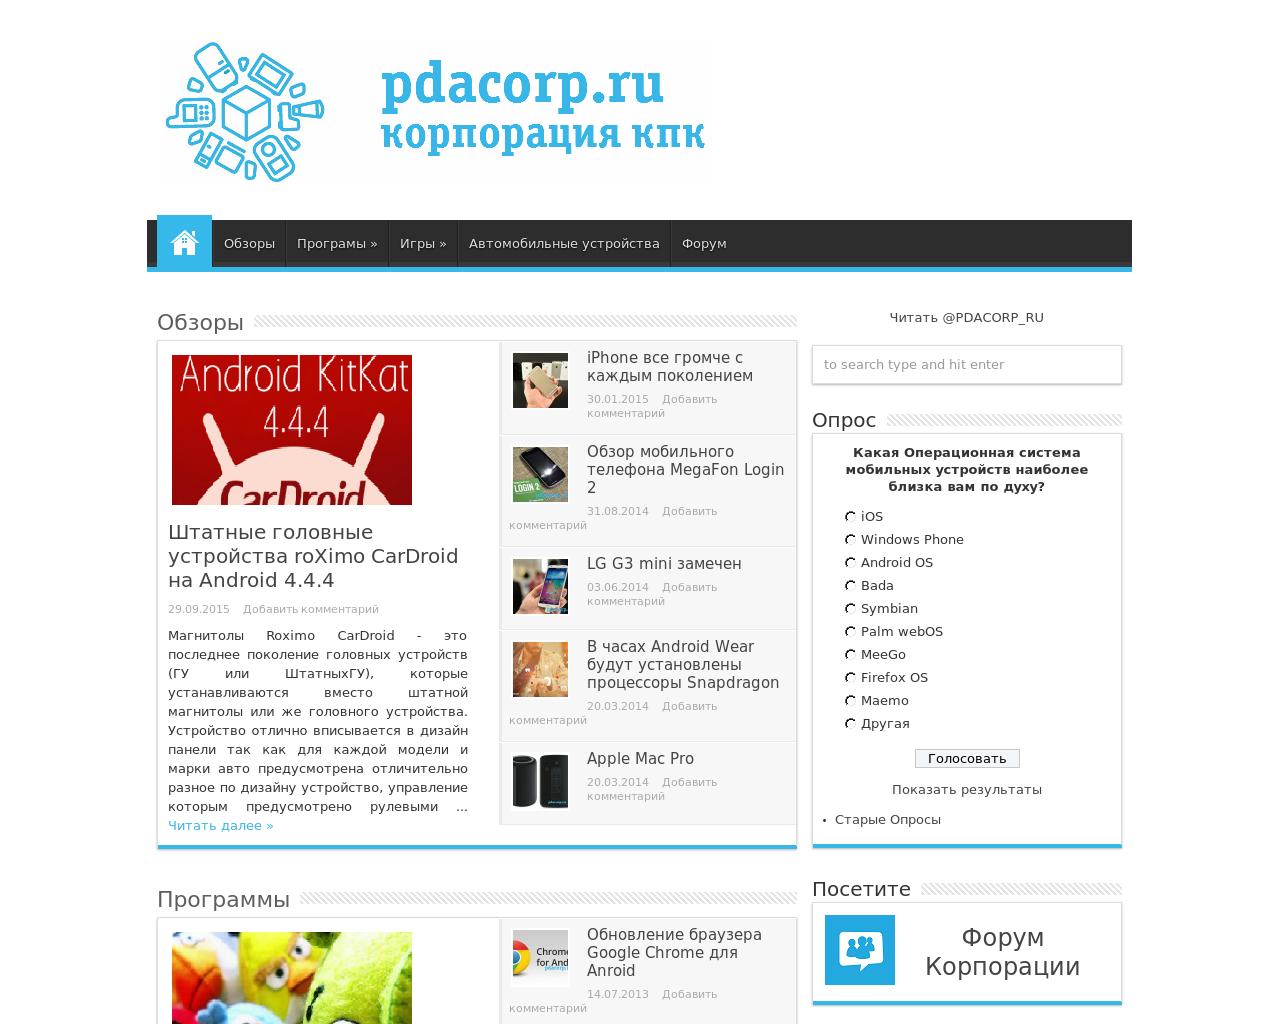 Изображение сайта pdacorp.ru в разрешении 1280x1024